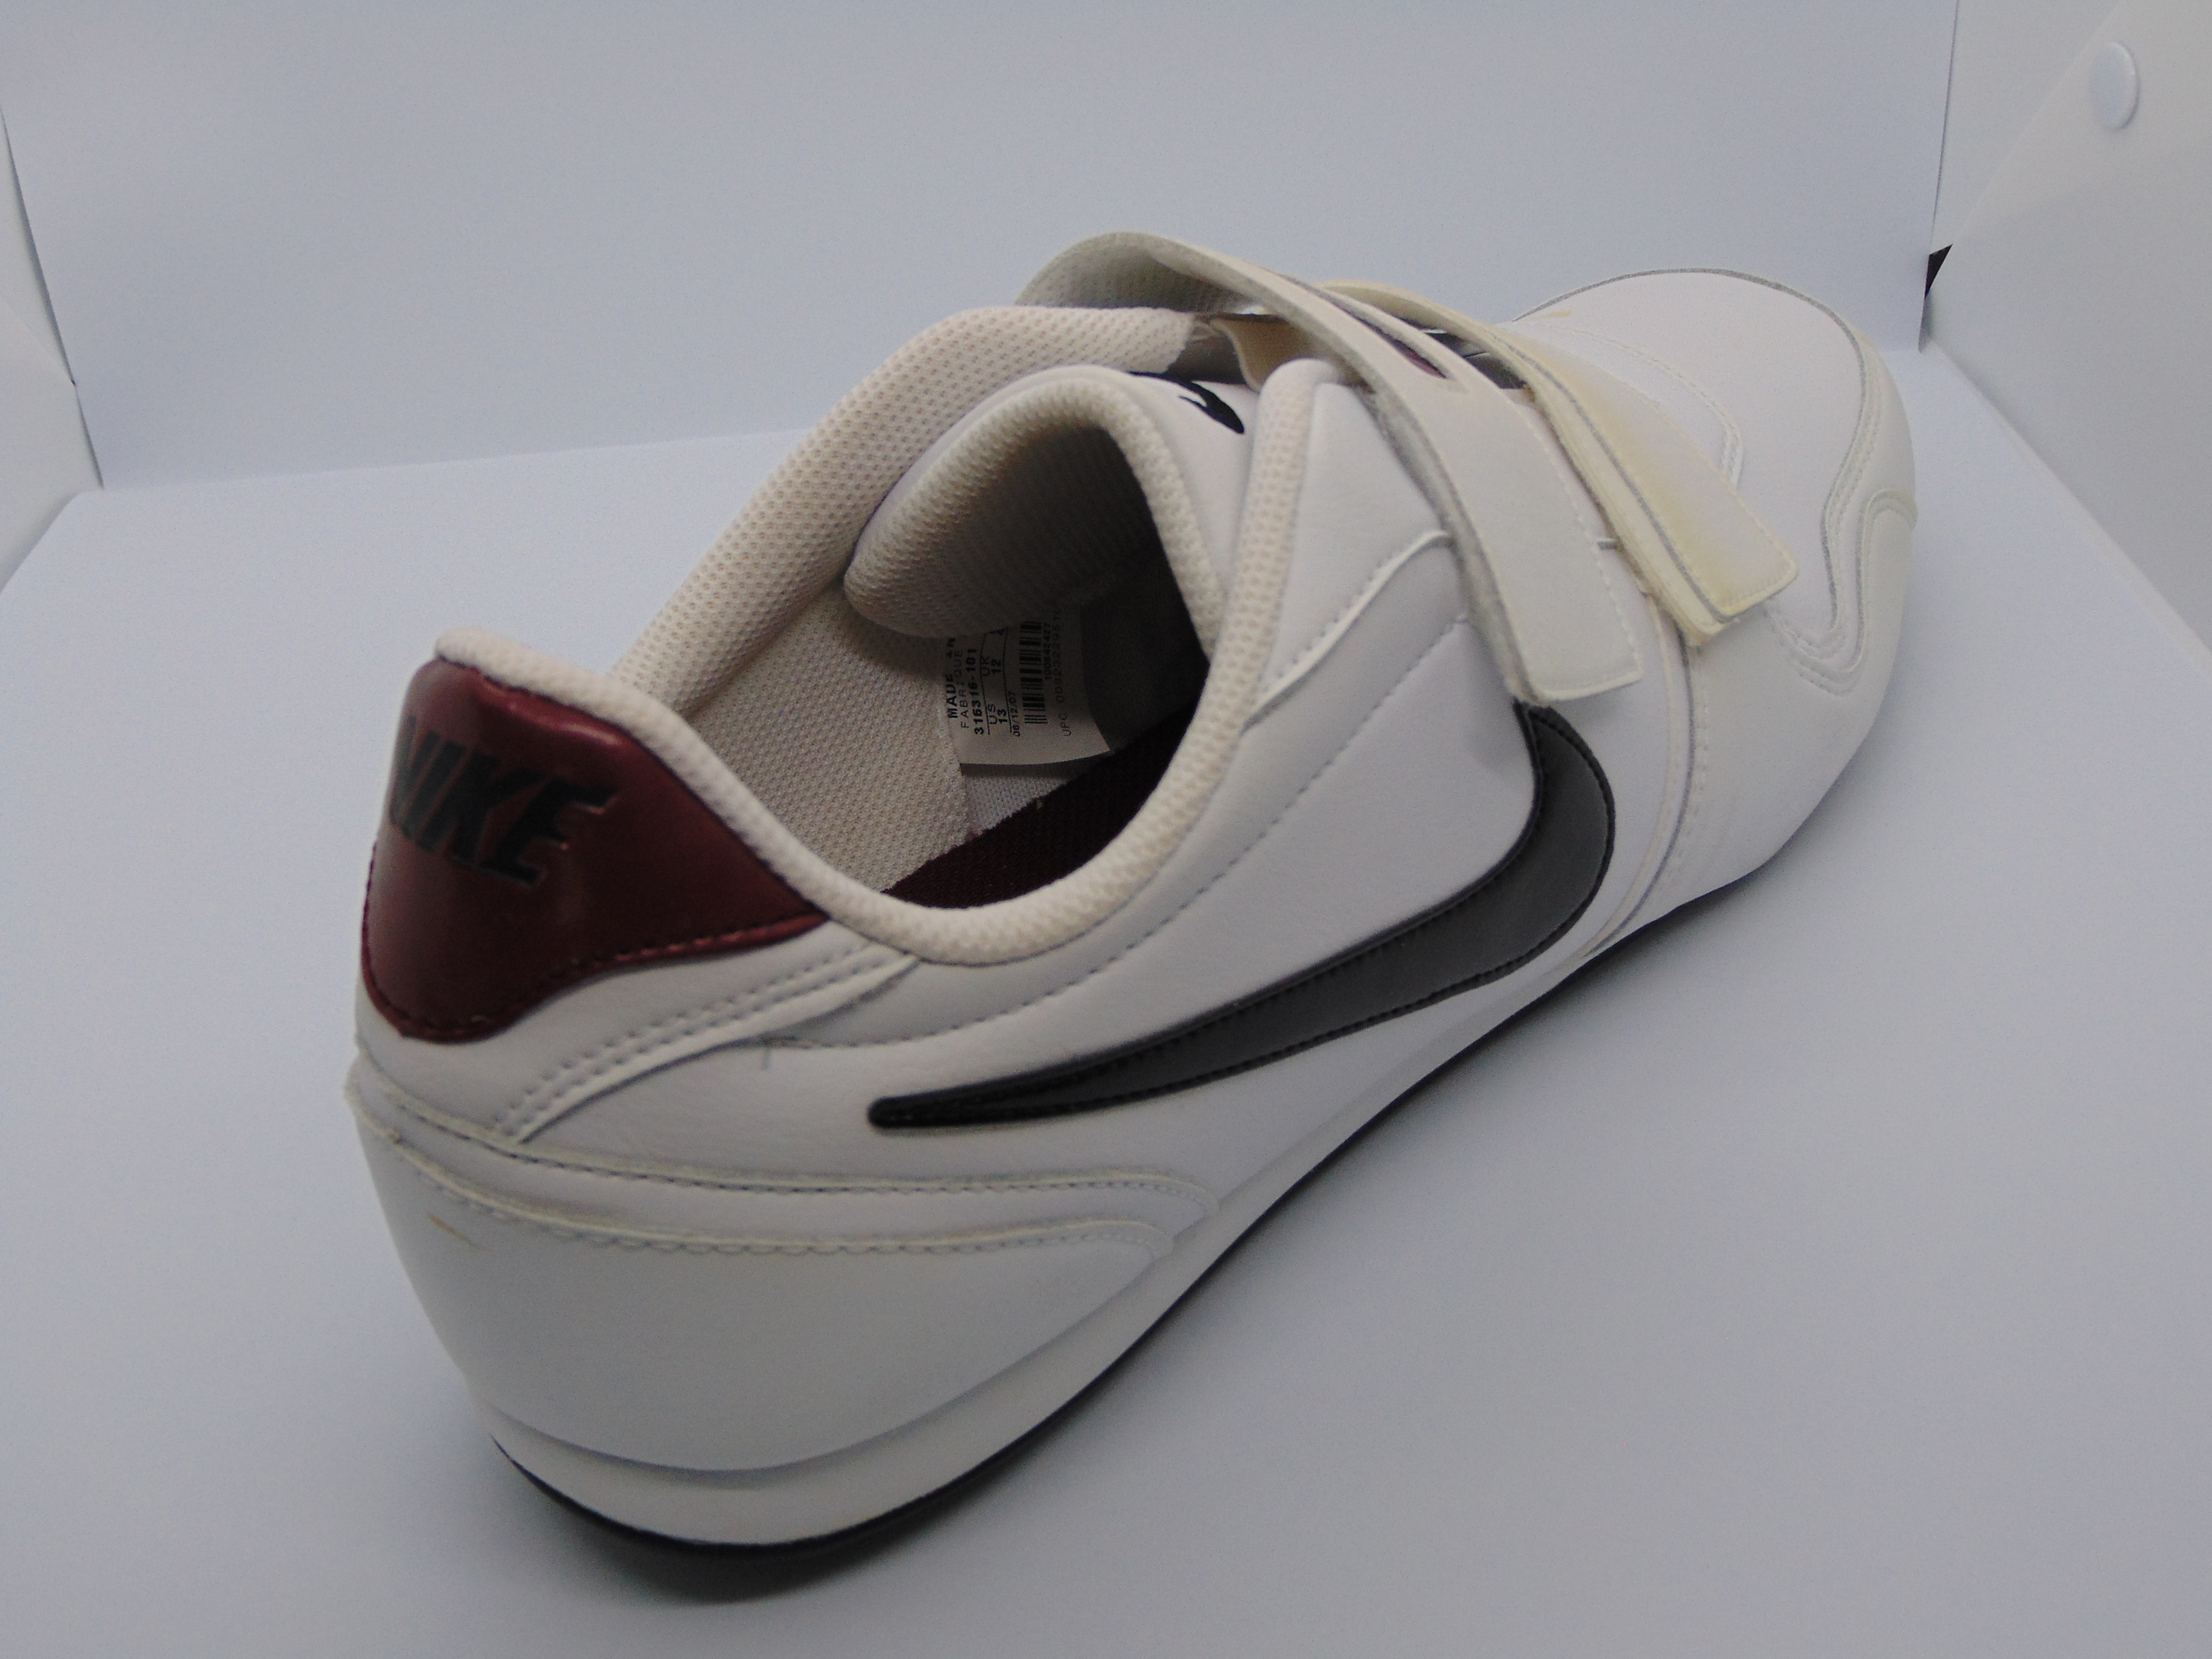 Nike Revengeance V shoes 316316-101 Uk size 12 Eur 47 was 70 Now 22.00